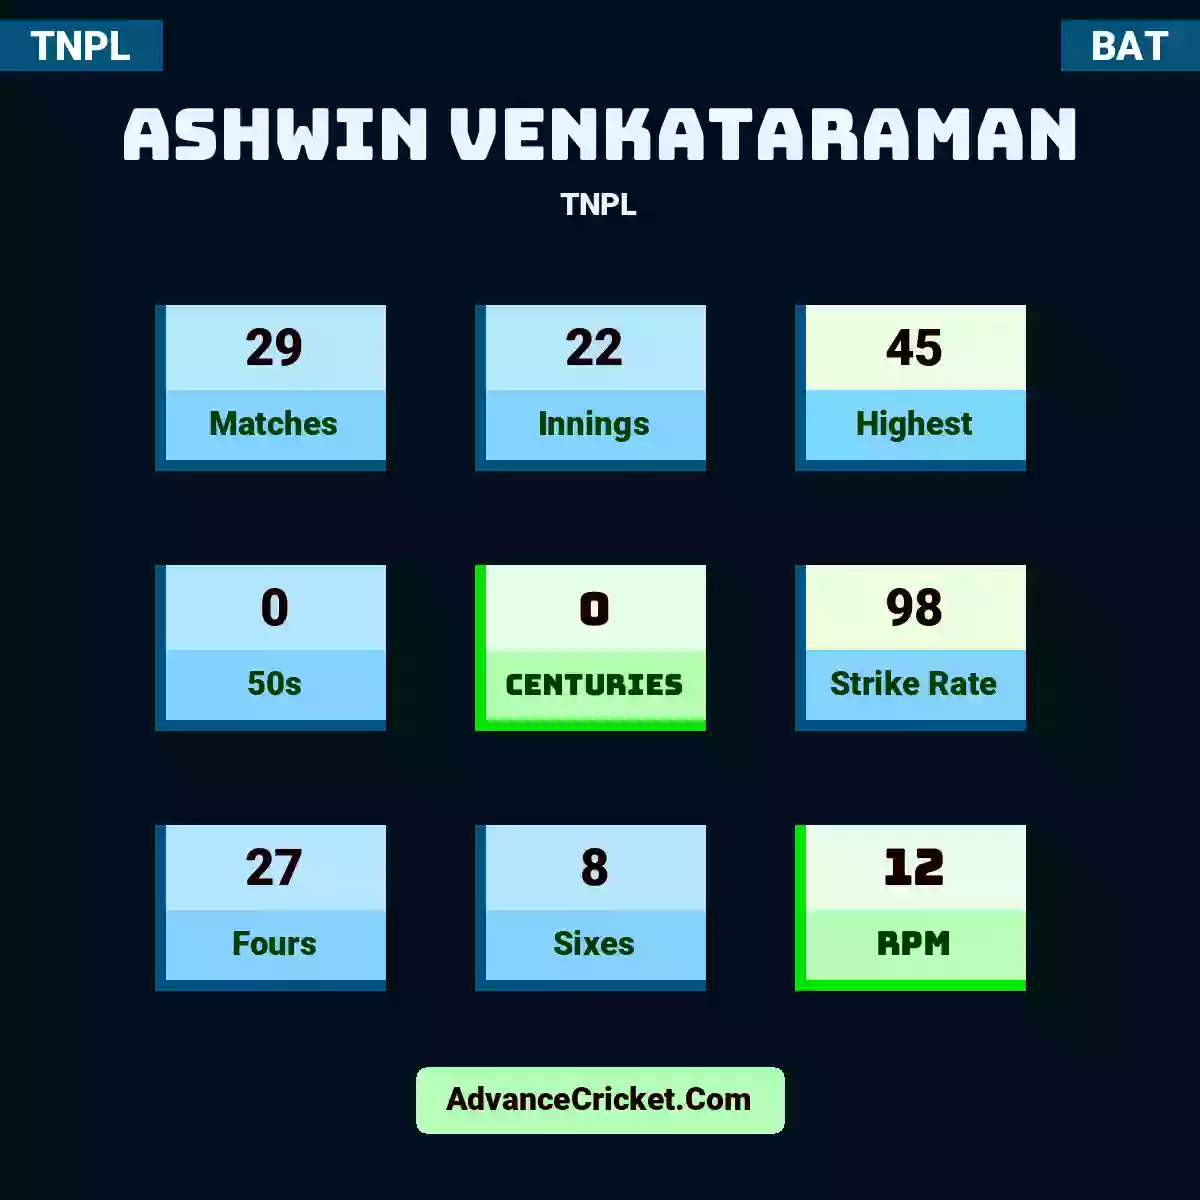 Ashwin Venkataraman TNPL , Ashwin Venkataraman played 29 matches, scored 45 runs as highest, 0 half-centuries, and 0 centuries, with a strike rate of 98. A.Venkataraman hit 27 fours and 8 sixes, with an RPM of 12.